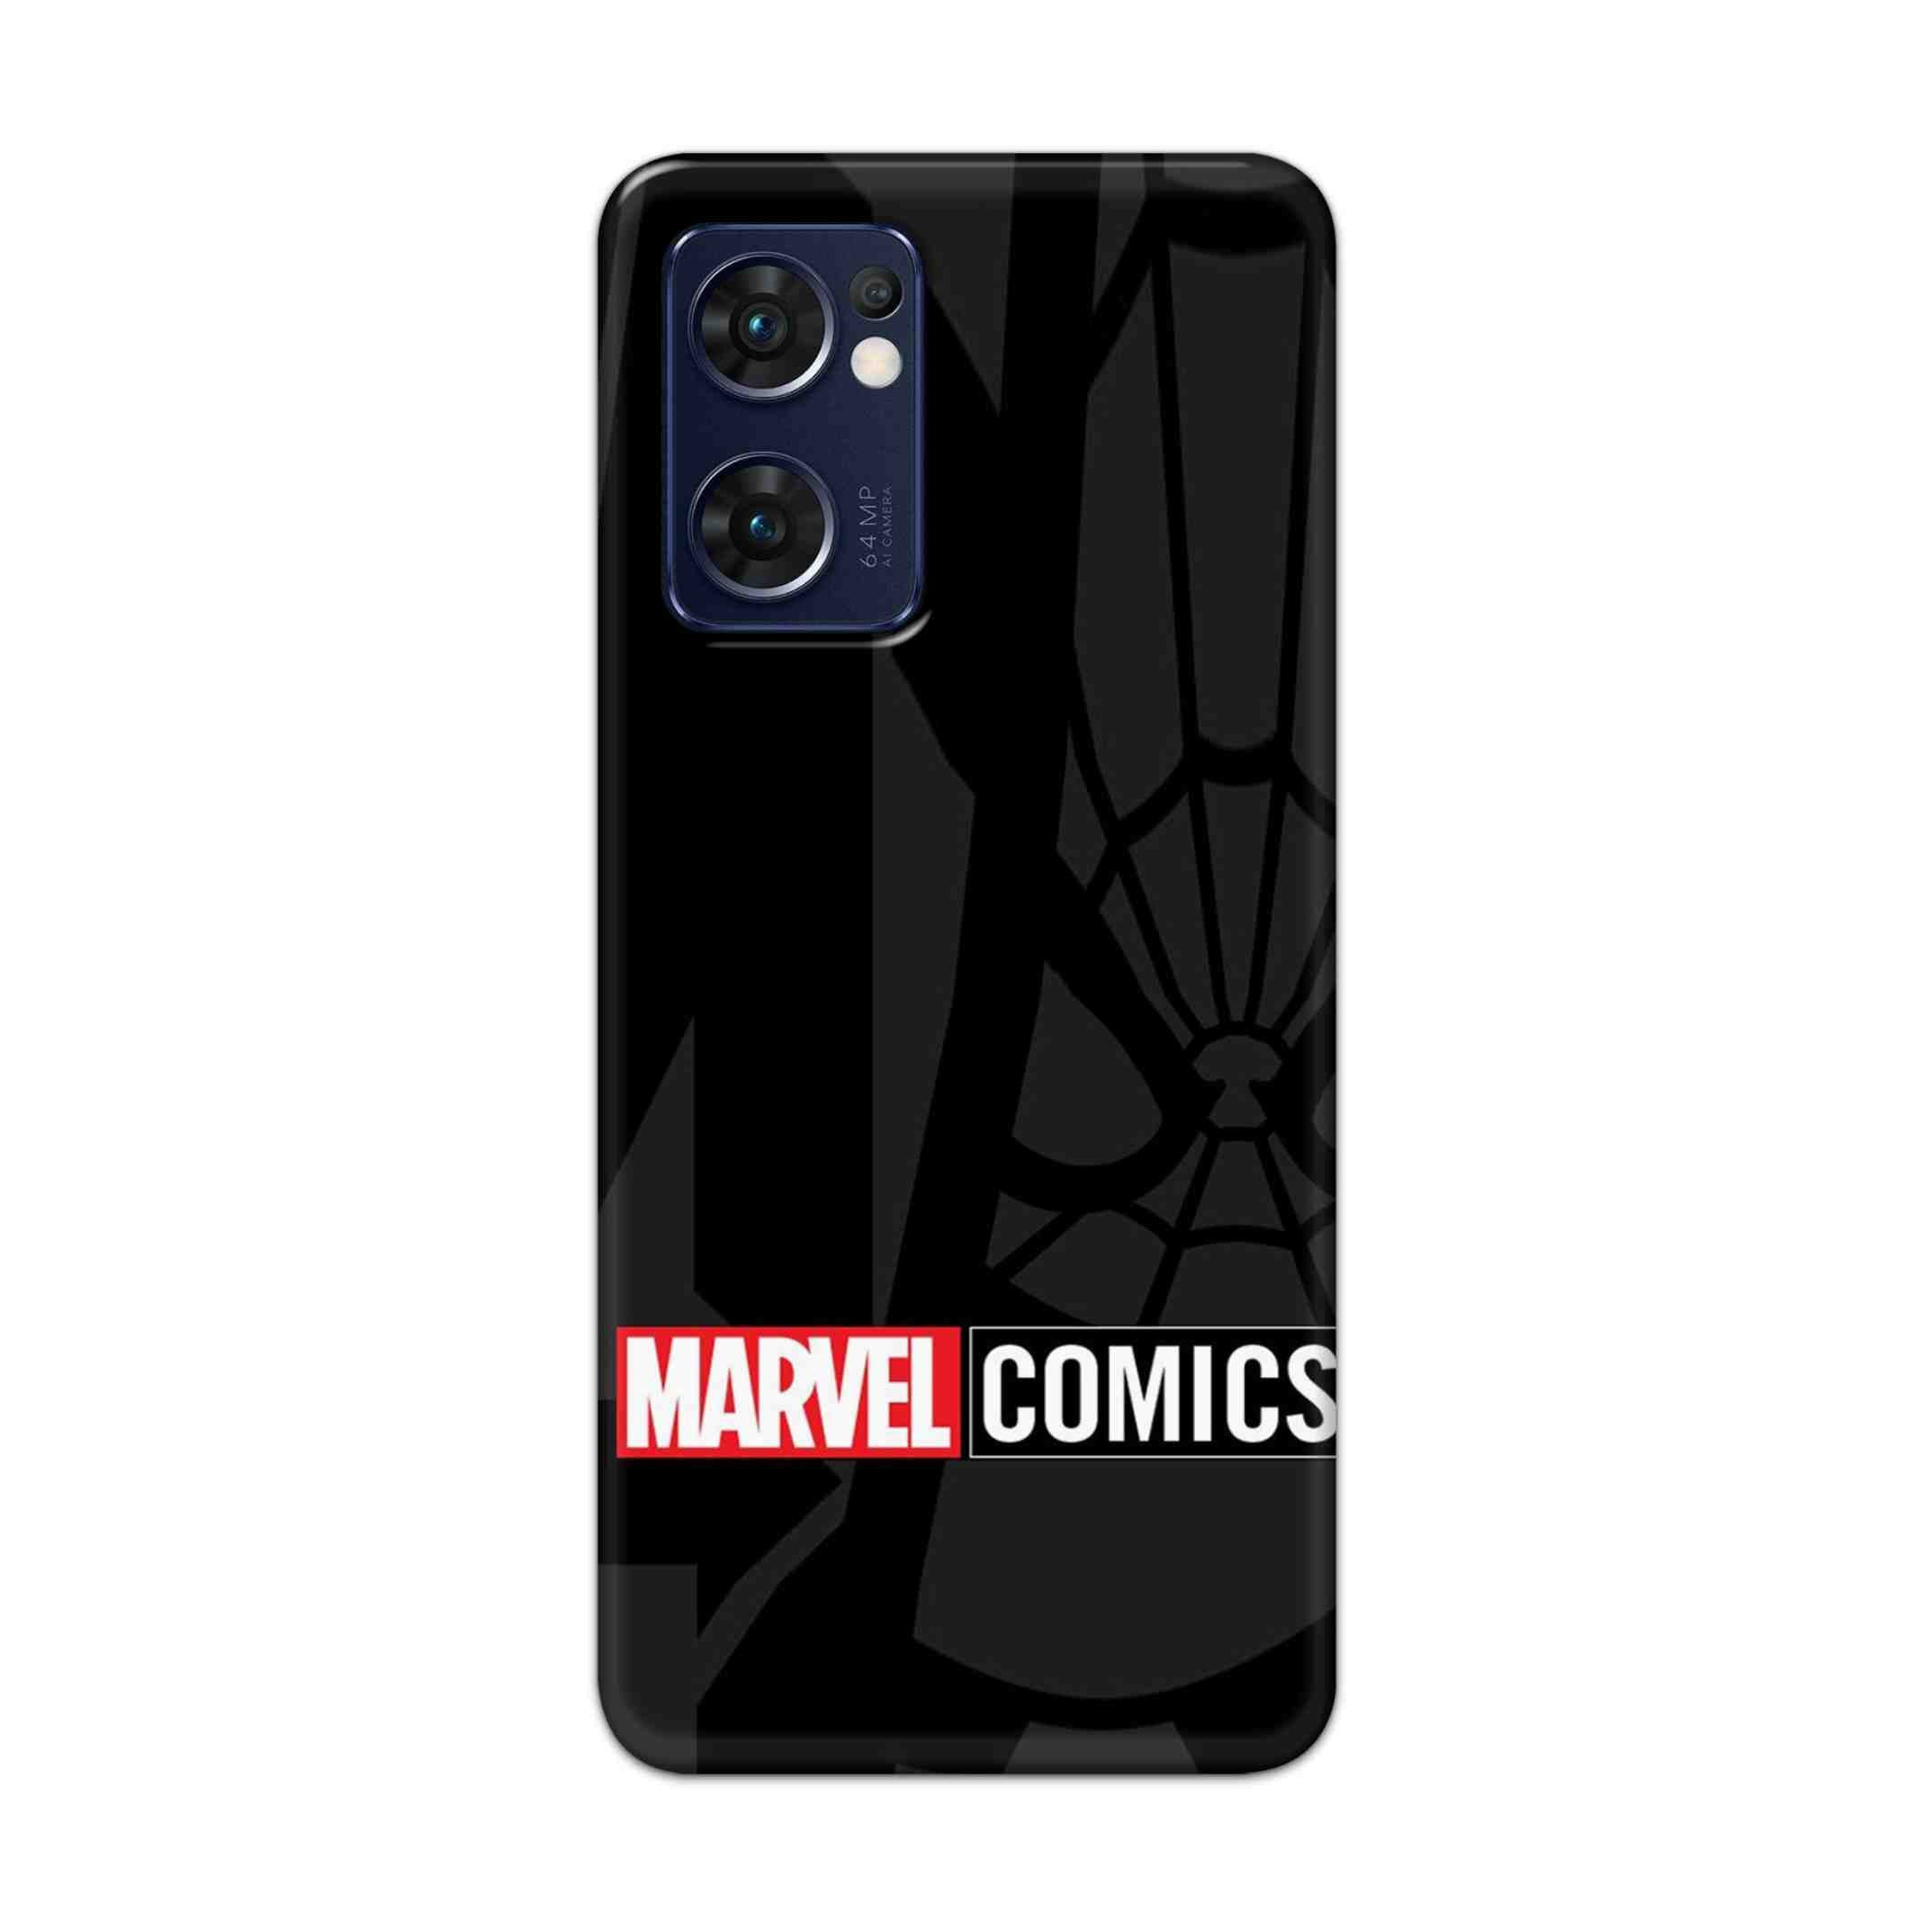 Buy Marvel Comics Hard Back Mobile Phone Case Cover For Reno 7 5G Online